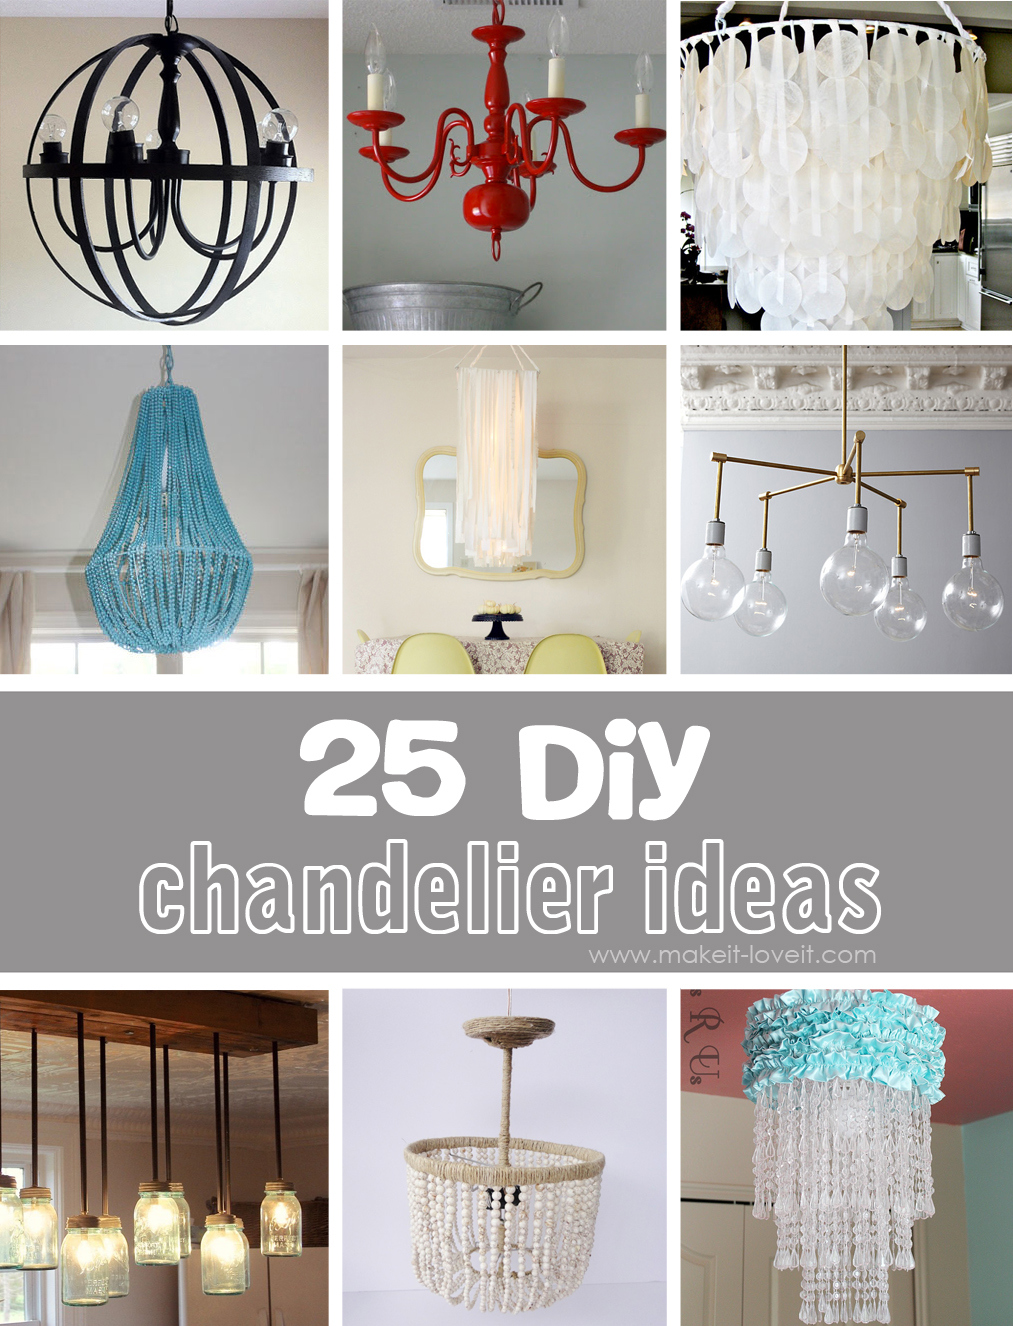 Small chandelier design ideas